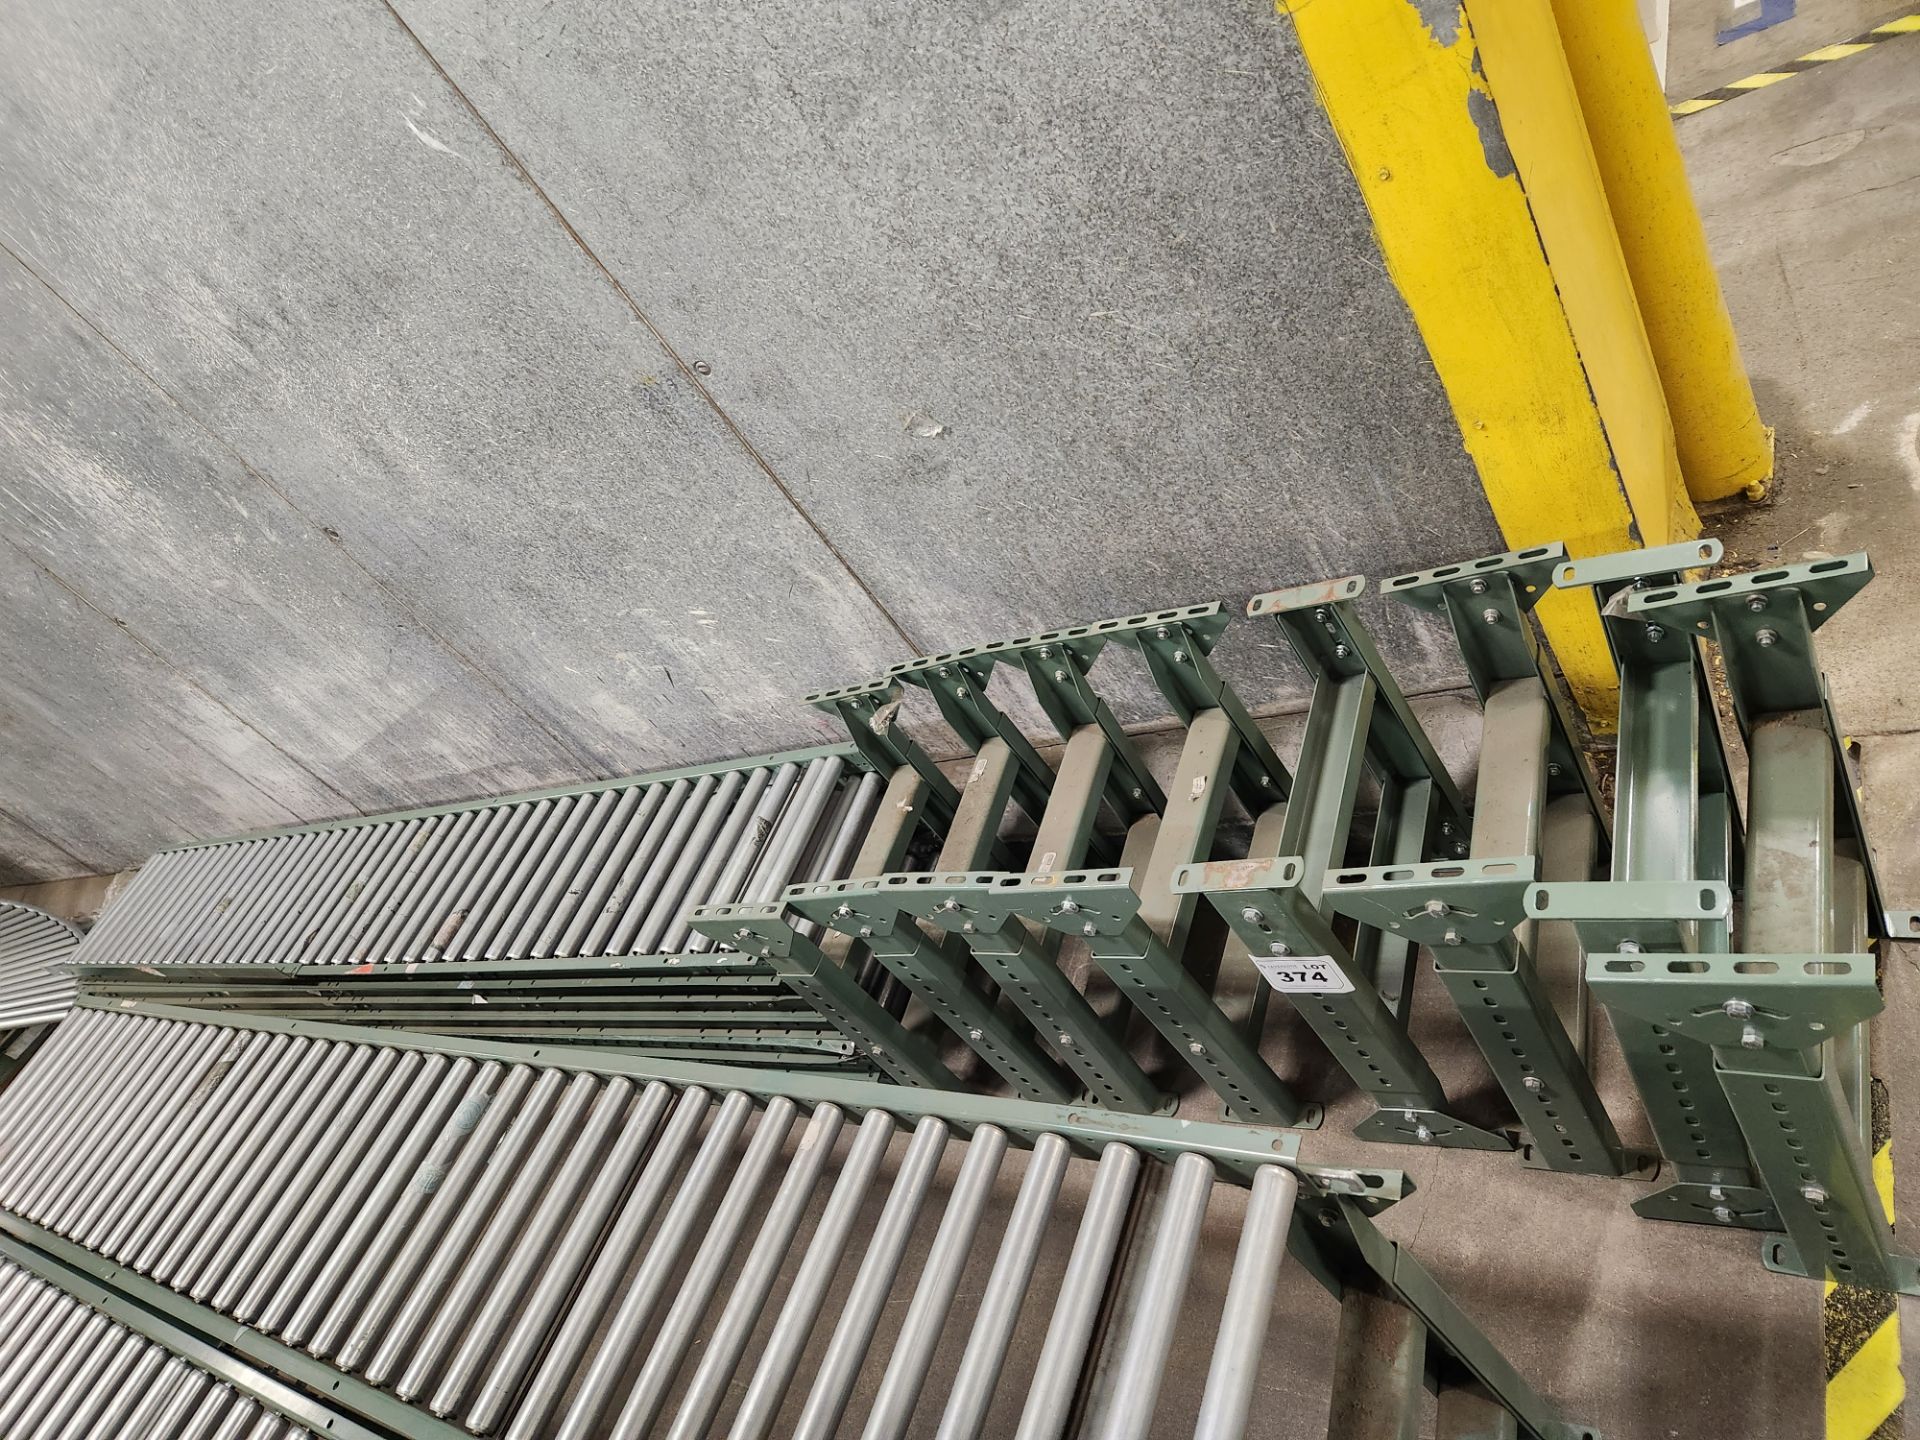 Lot of ULINE Gravity Roller Conveyors